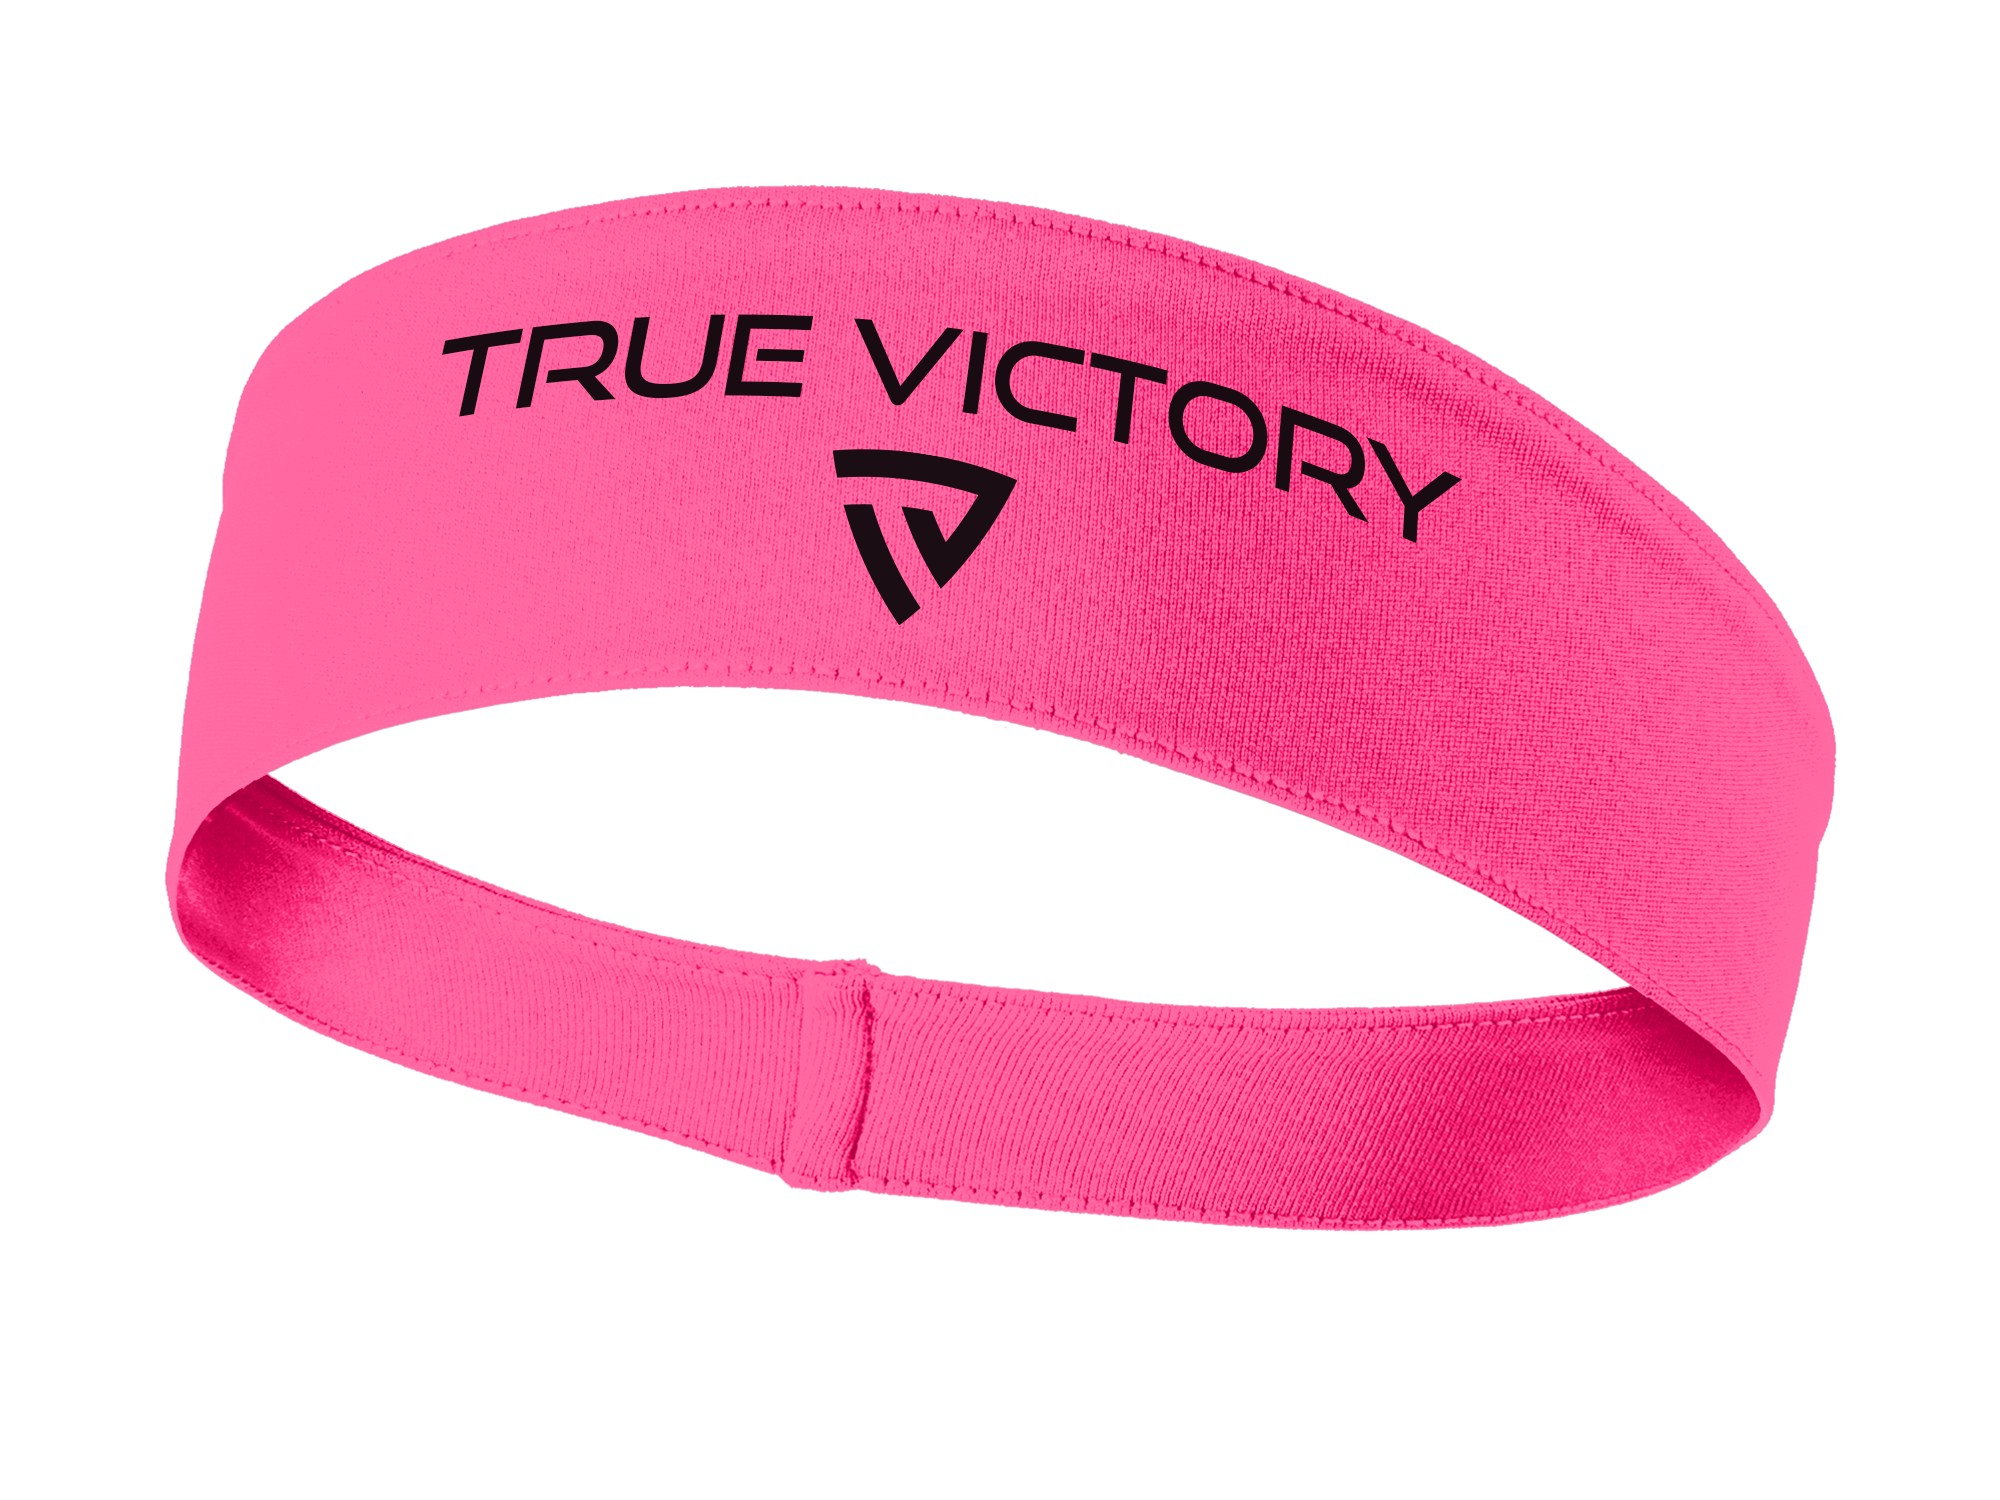 Victorious Neon Pink Headband